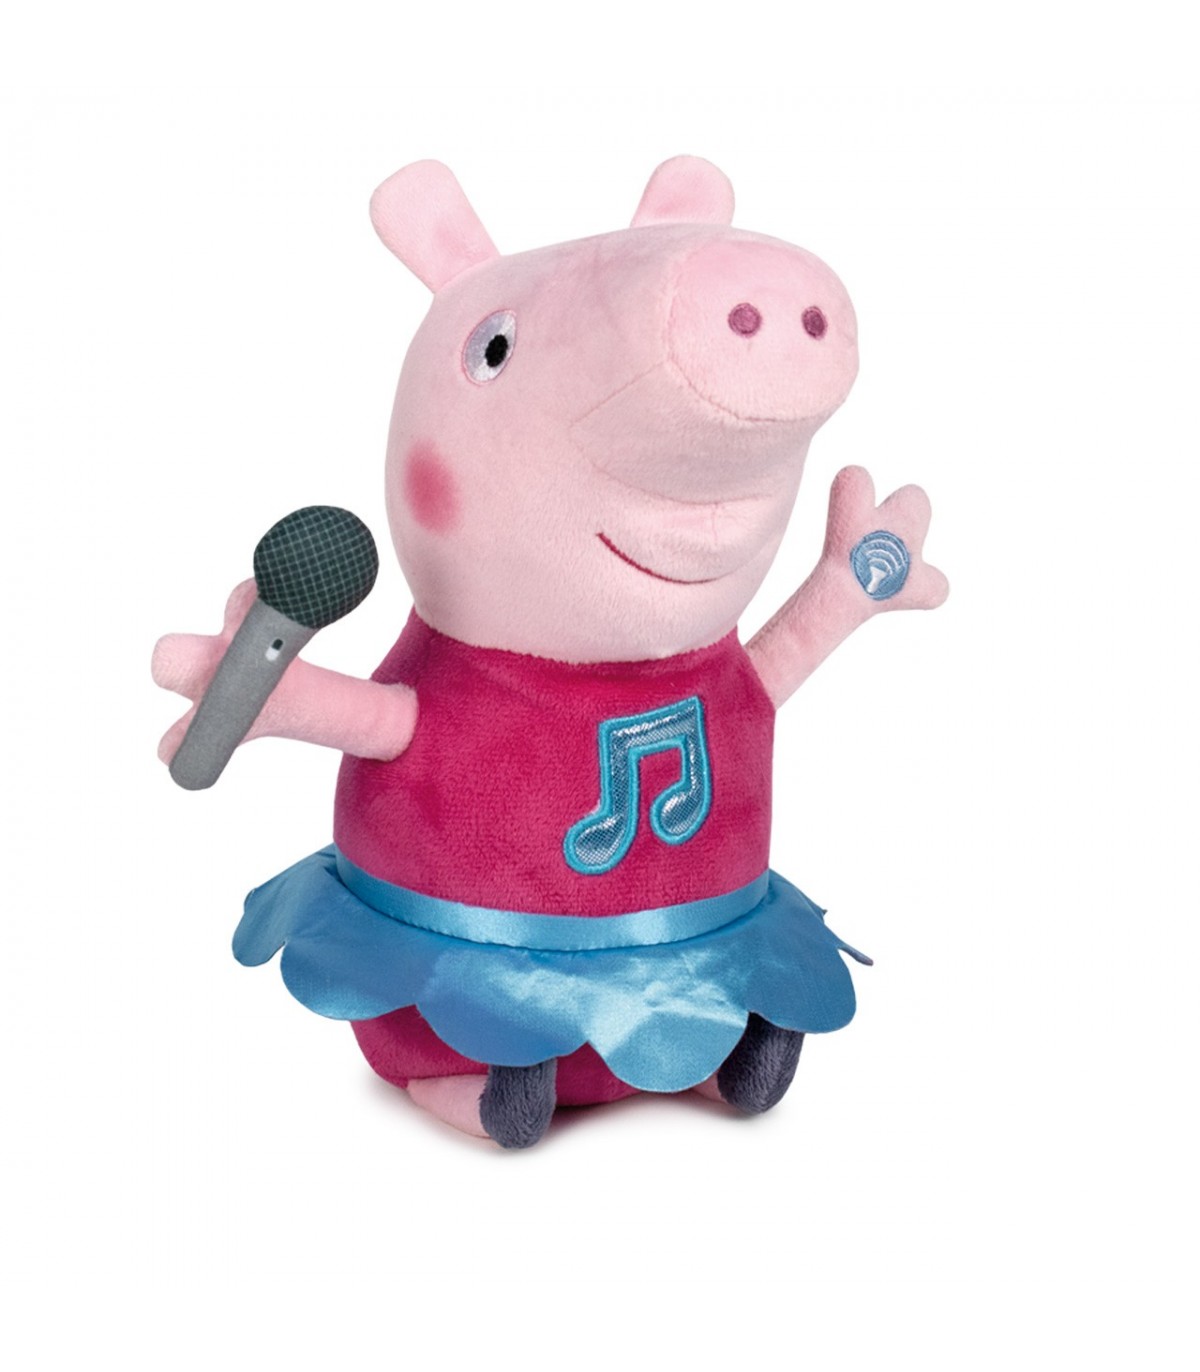 Peppa Pig Peluche Musical 27cm 760019955, PEPPA PIG FAMOSA